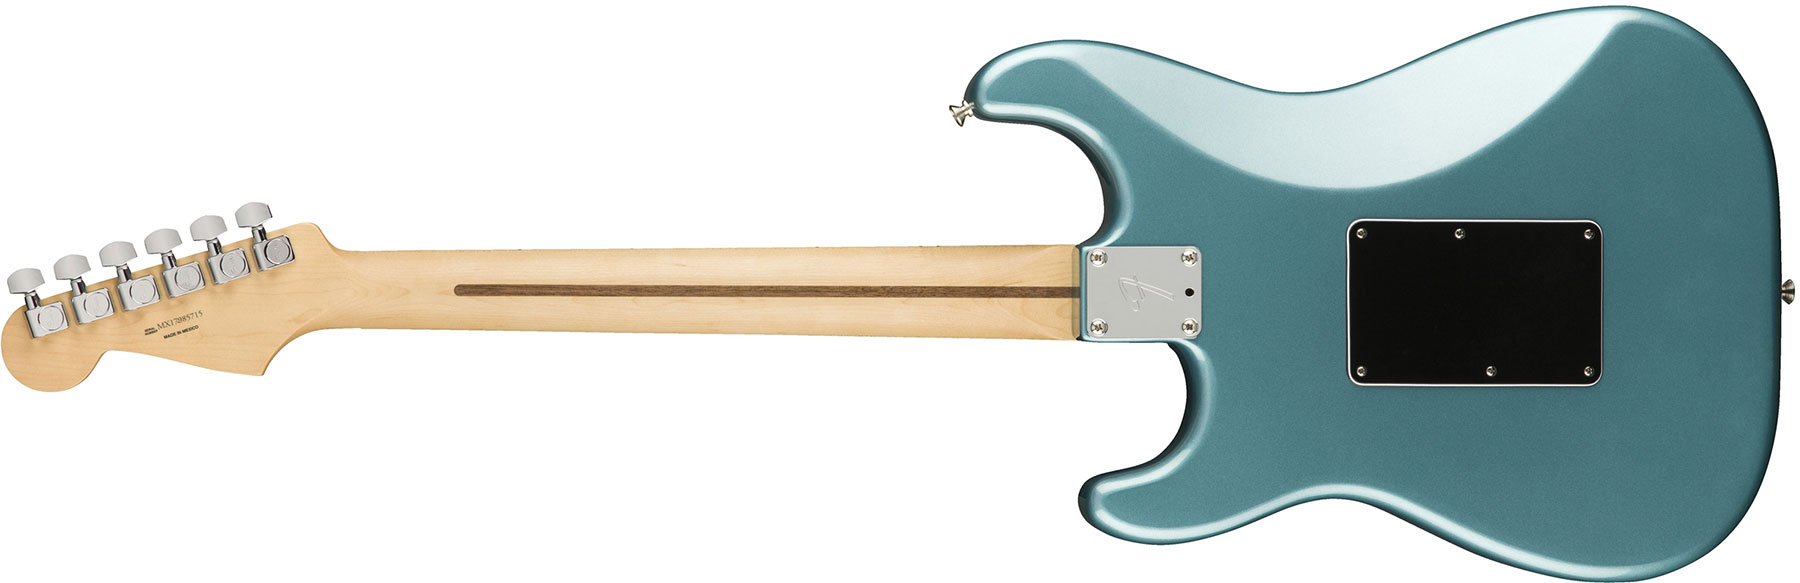 Fender Strat Player Floyd Rose Mex Hss Fr Mn - Tidepool - Str shape electric guitar - Variation 1